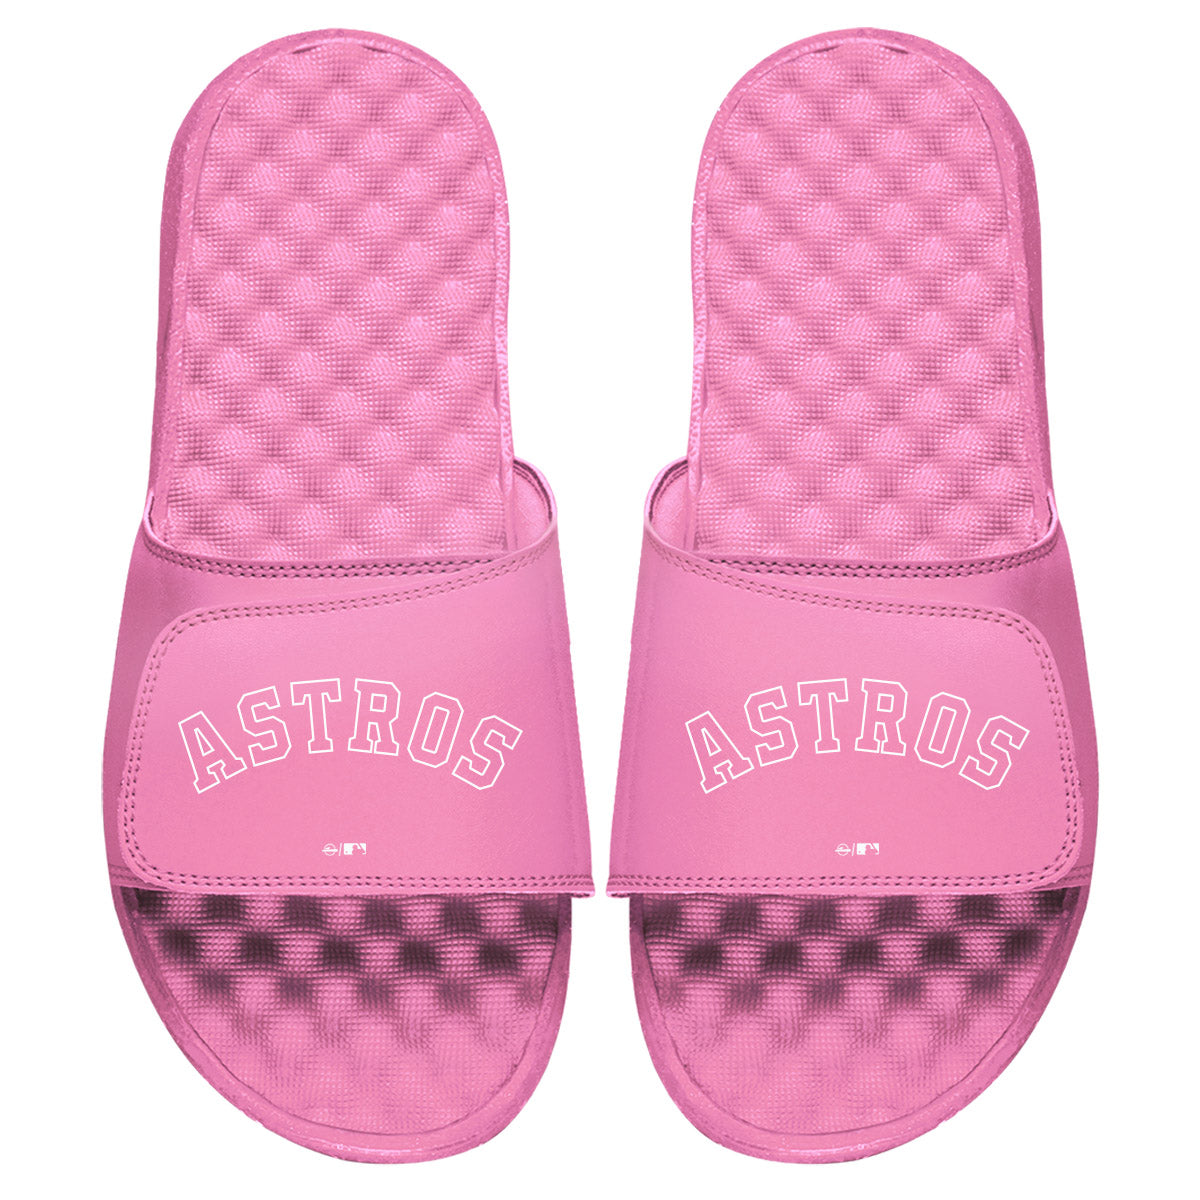 Houston Astros Primary Pink Slides